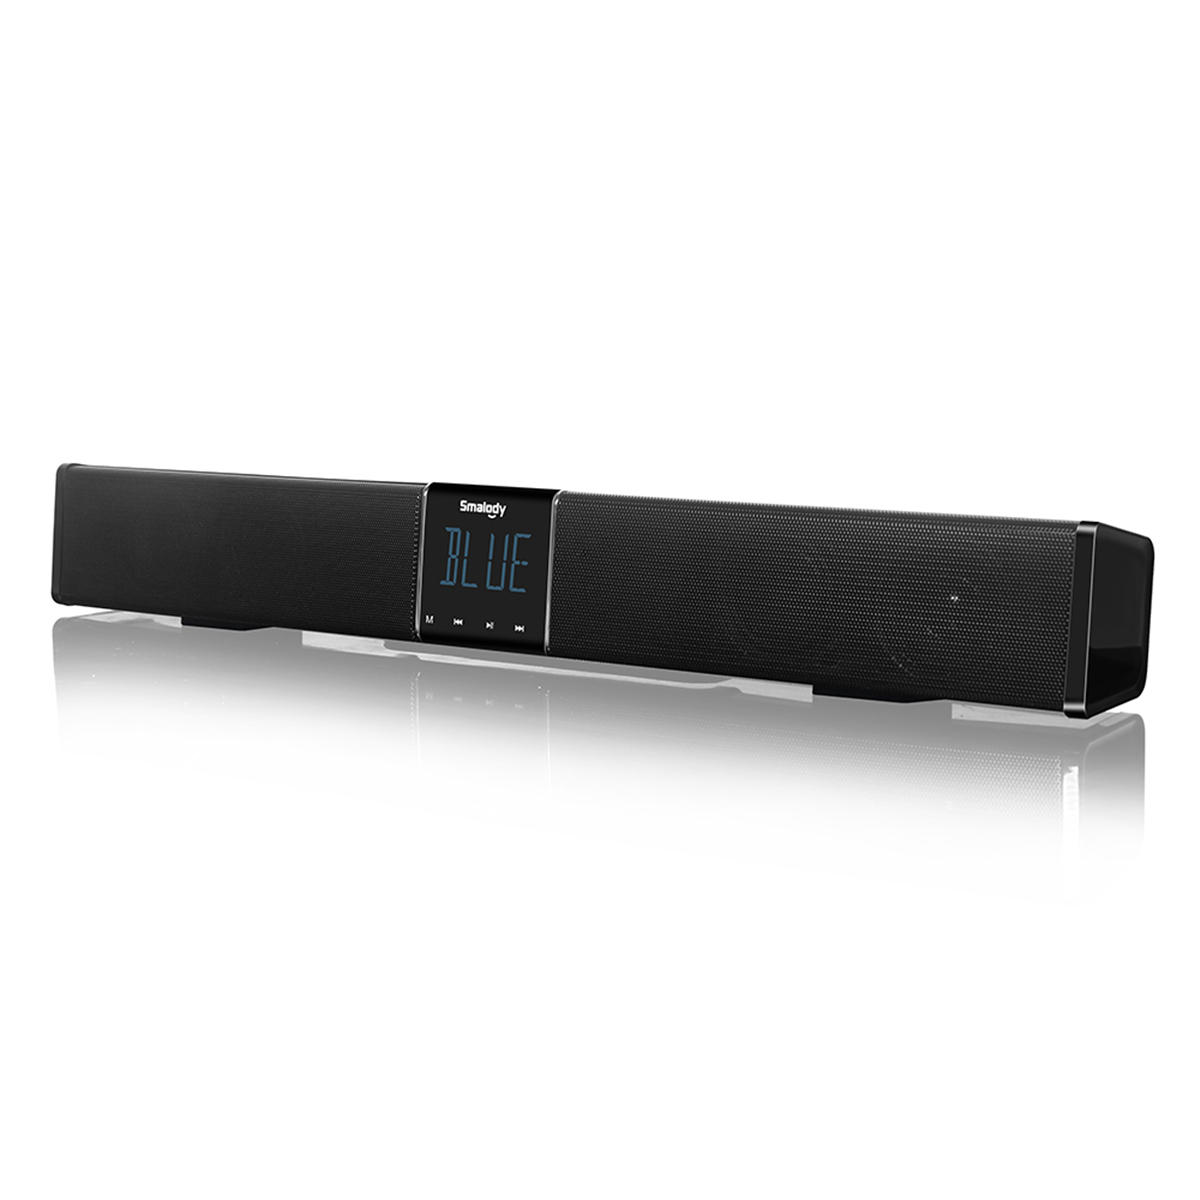 TV Home Theater Bluetooth Speaker Stereo Bass Soundbar Subwoofer Remote Control